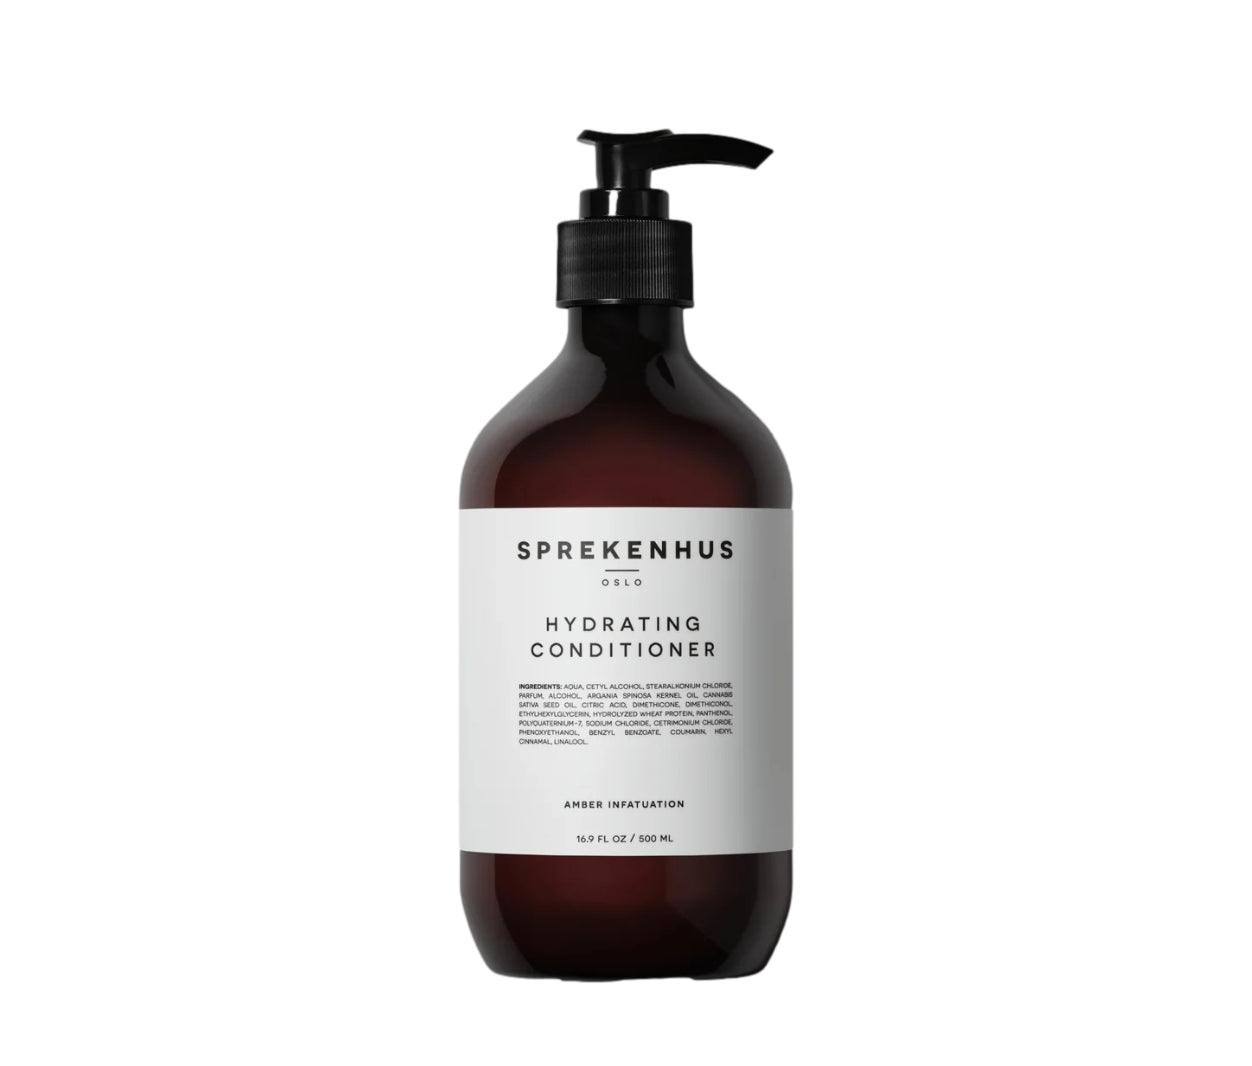 Sprekenhus Hydrating Conditioner 500ml - Amber Infatution Shampoo Gjennomsiktig